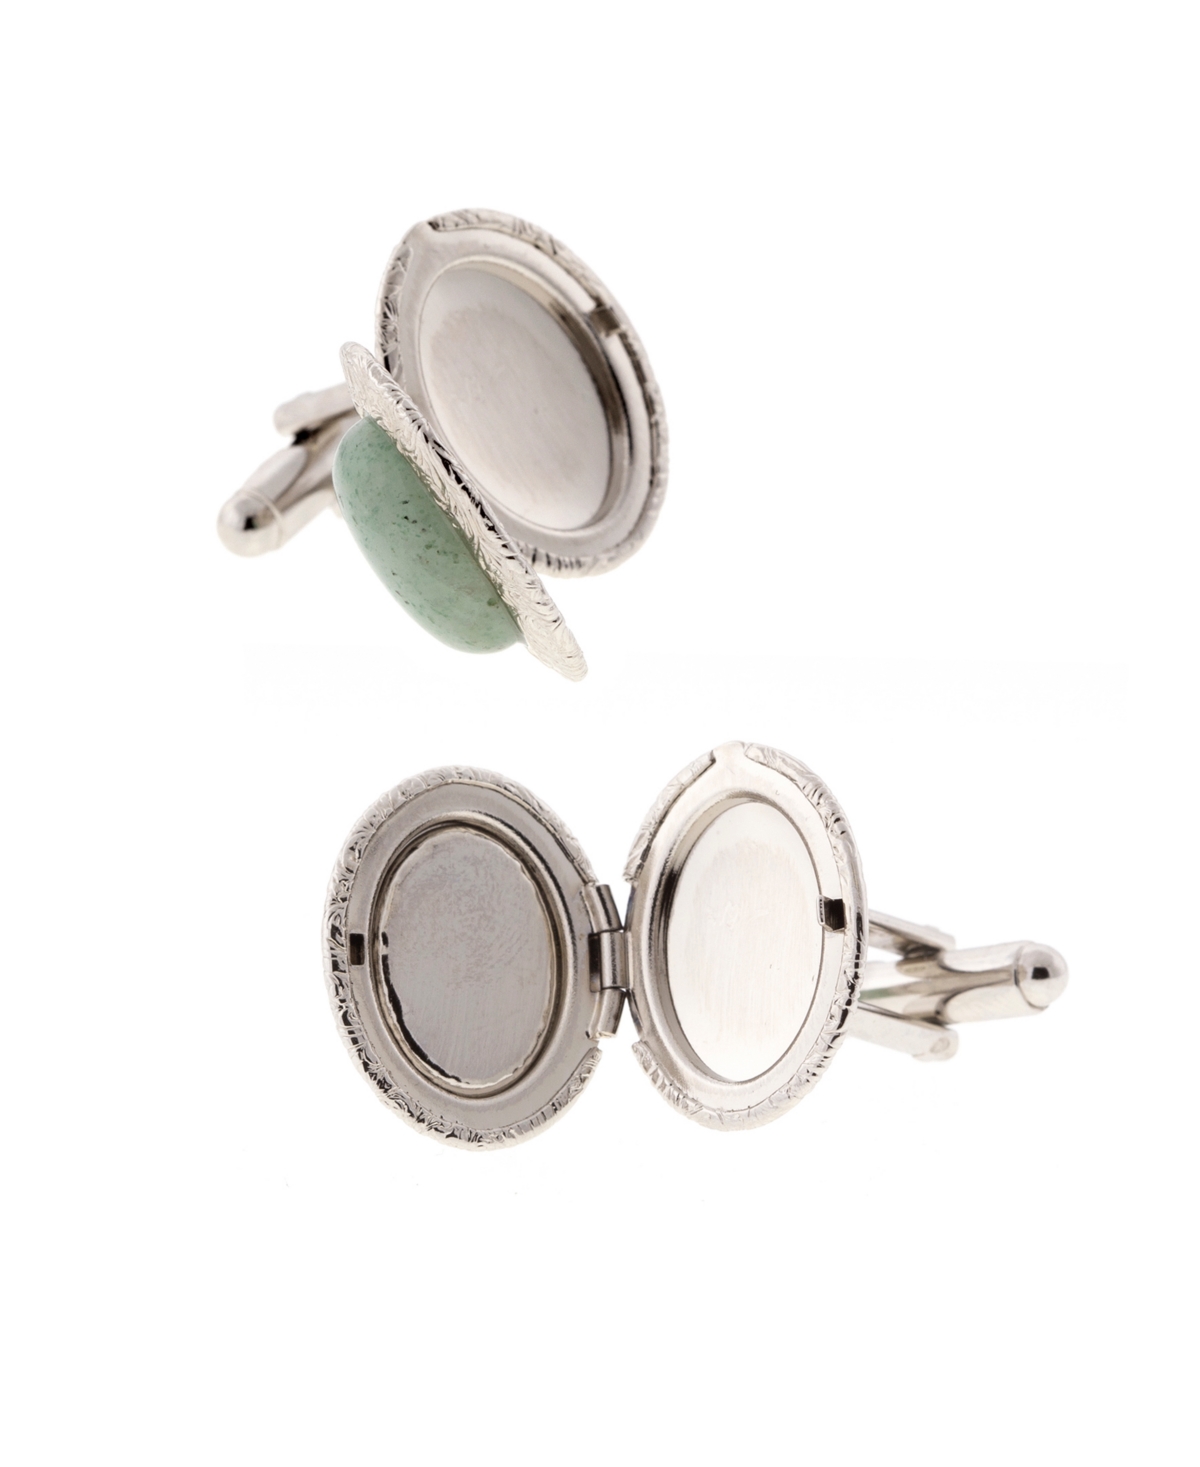 Jewelry Silver-Tone Semi-Precious Aventurine Oval Cufflinks - Green